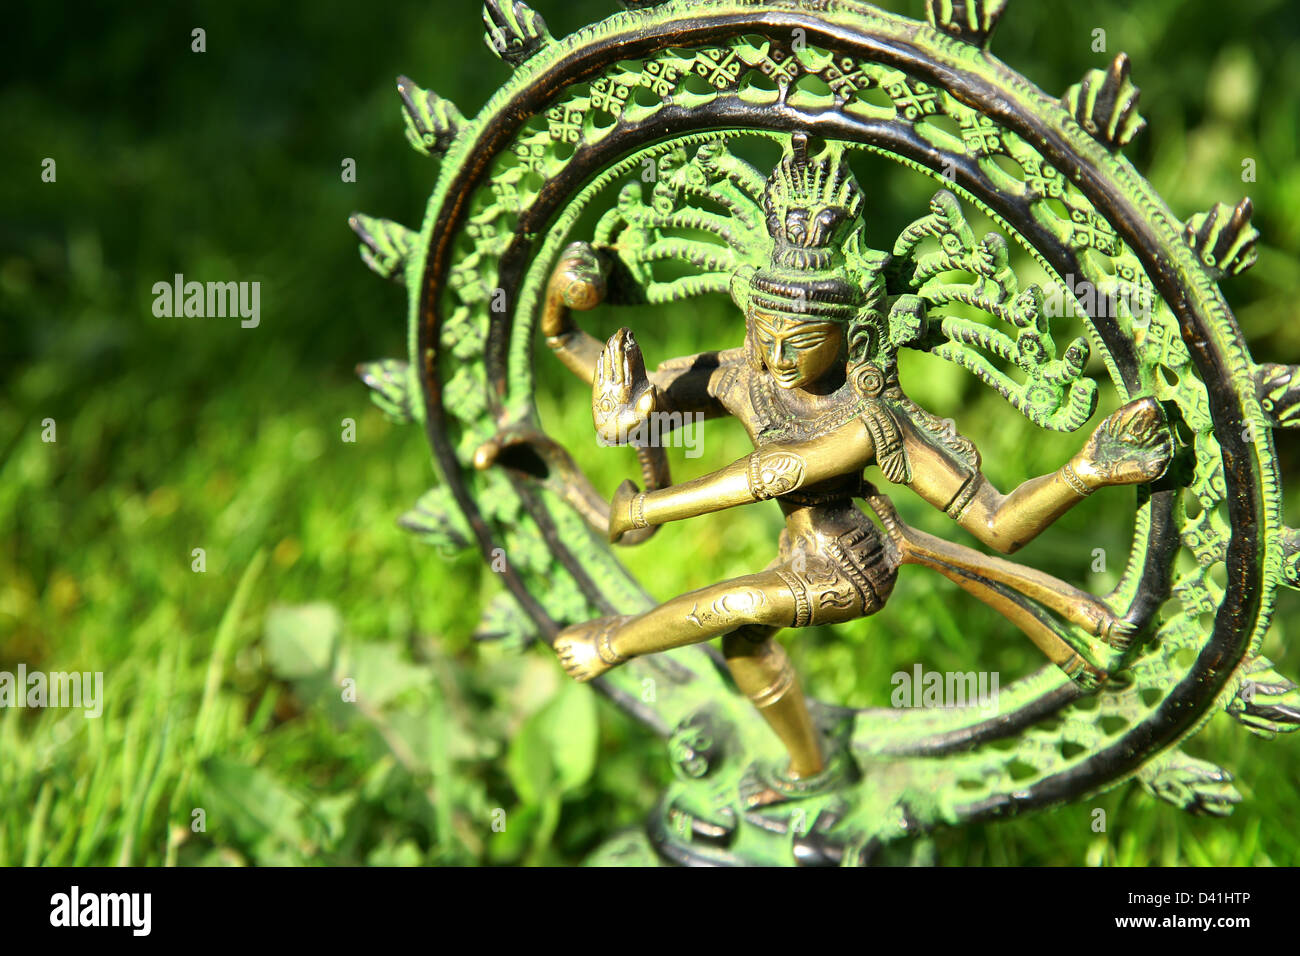 705 Bharatanatyam Illustration Images, Stock Photos & Vectors | Shutterstock